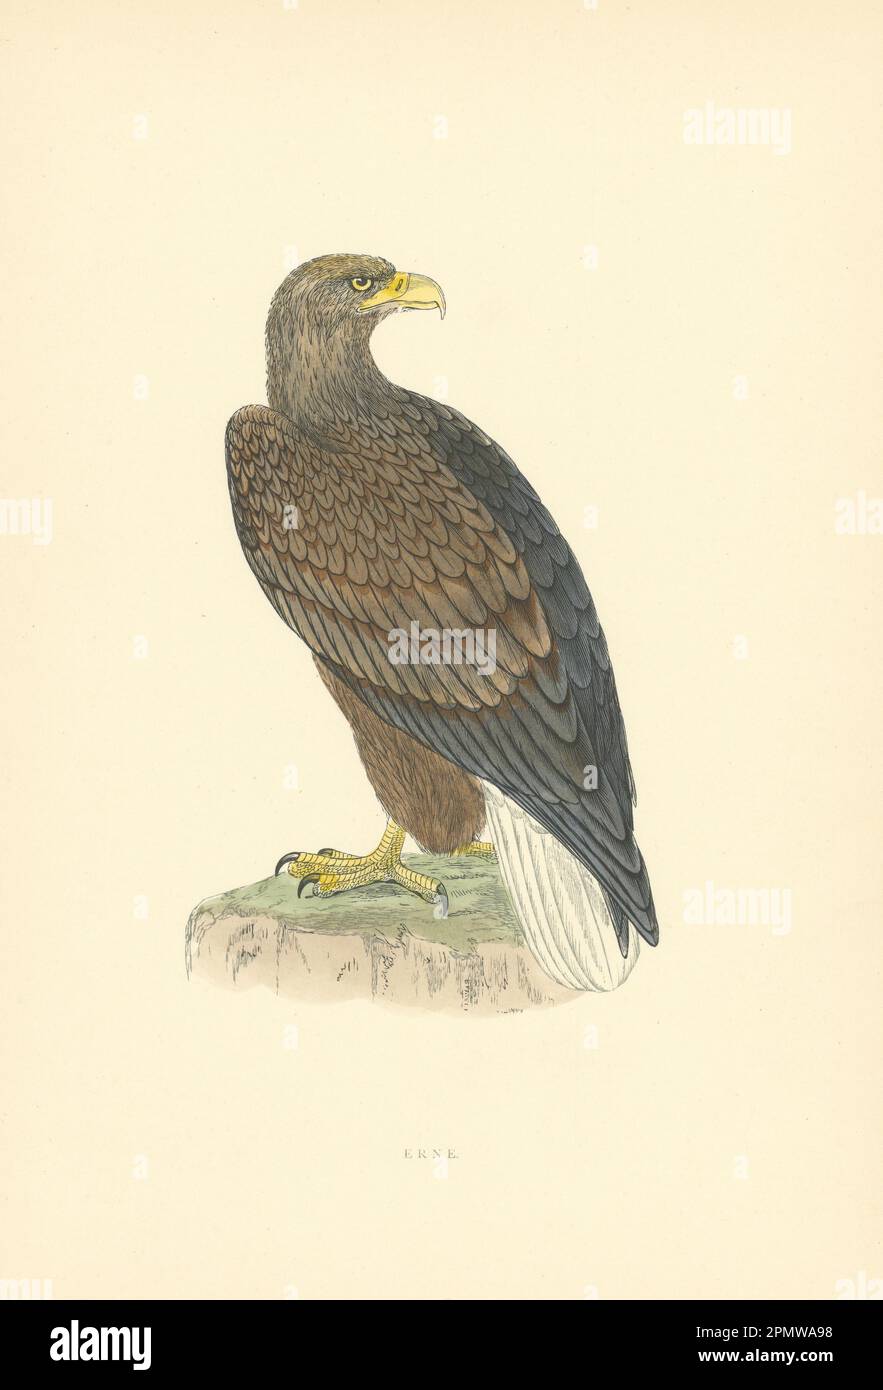 Erne. Morris's British Birds. Stampa a colori antica 1903 anni Foto Stock